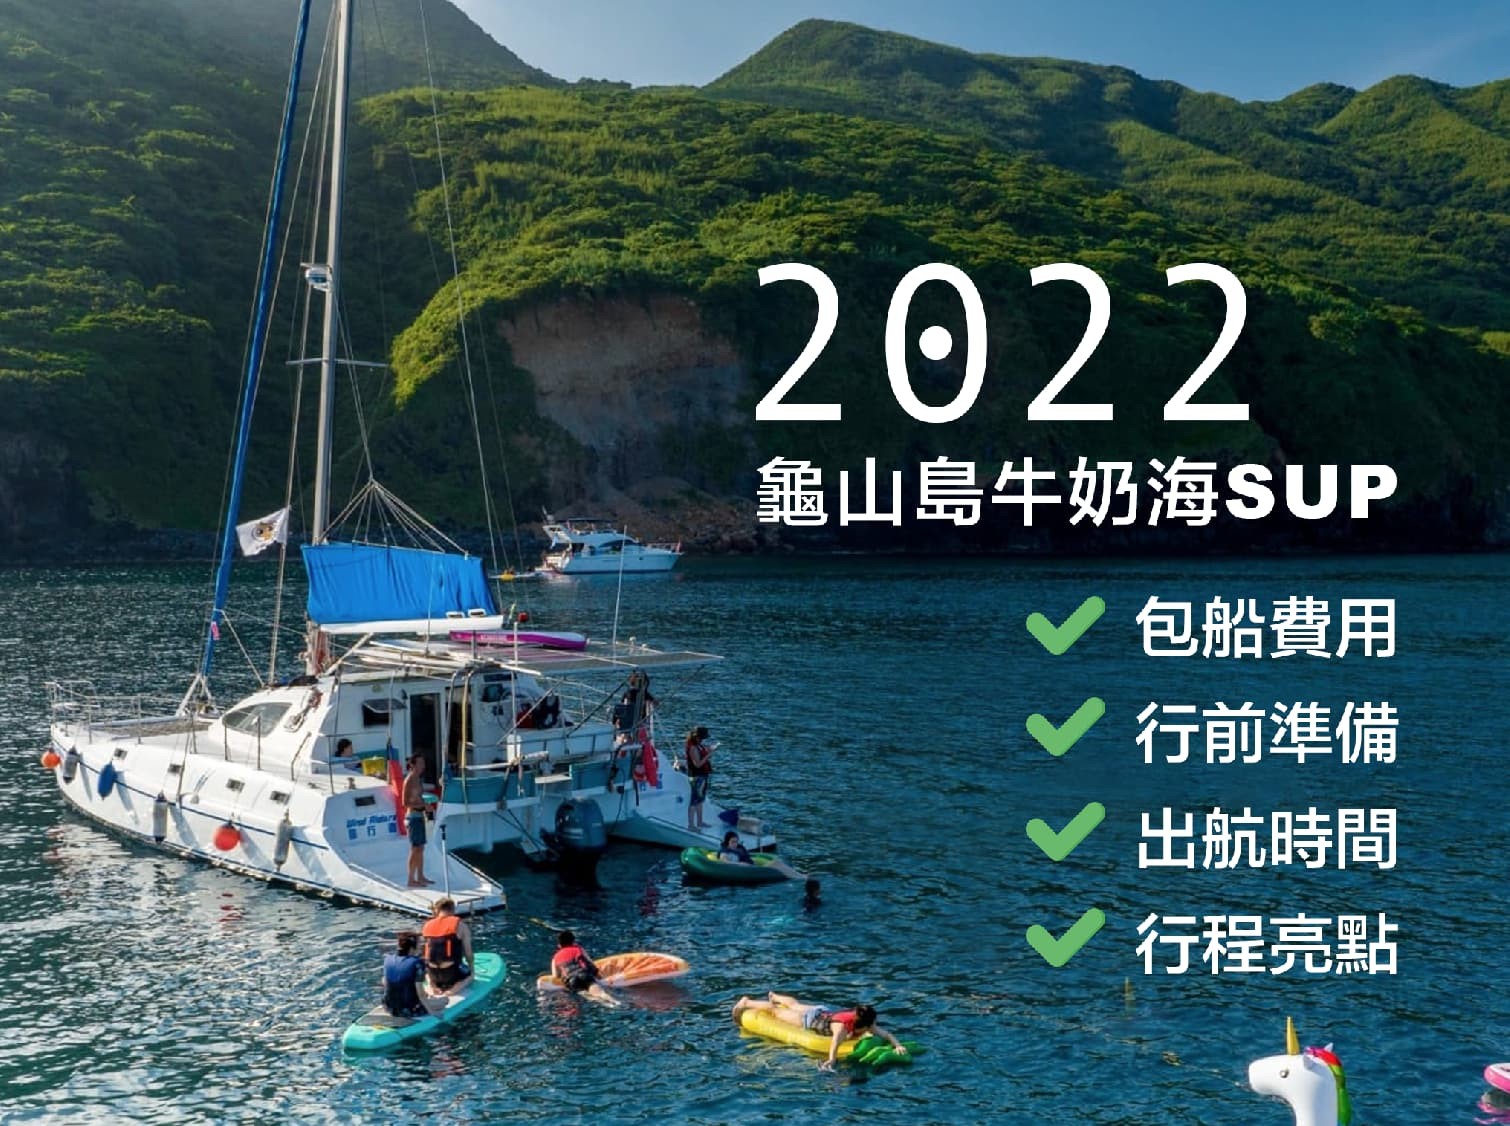 A must-play experience this summer! Dream Milk Lake SUP + sailing around Guishan Island!